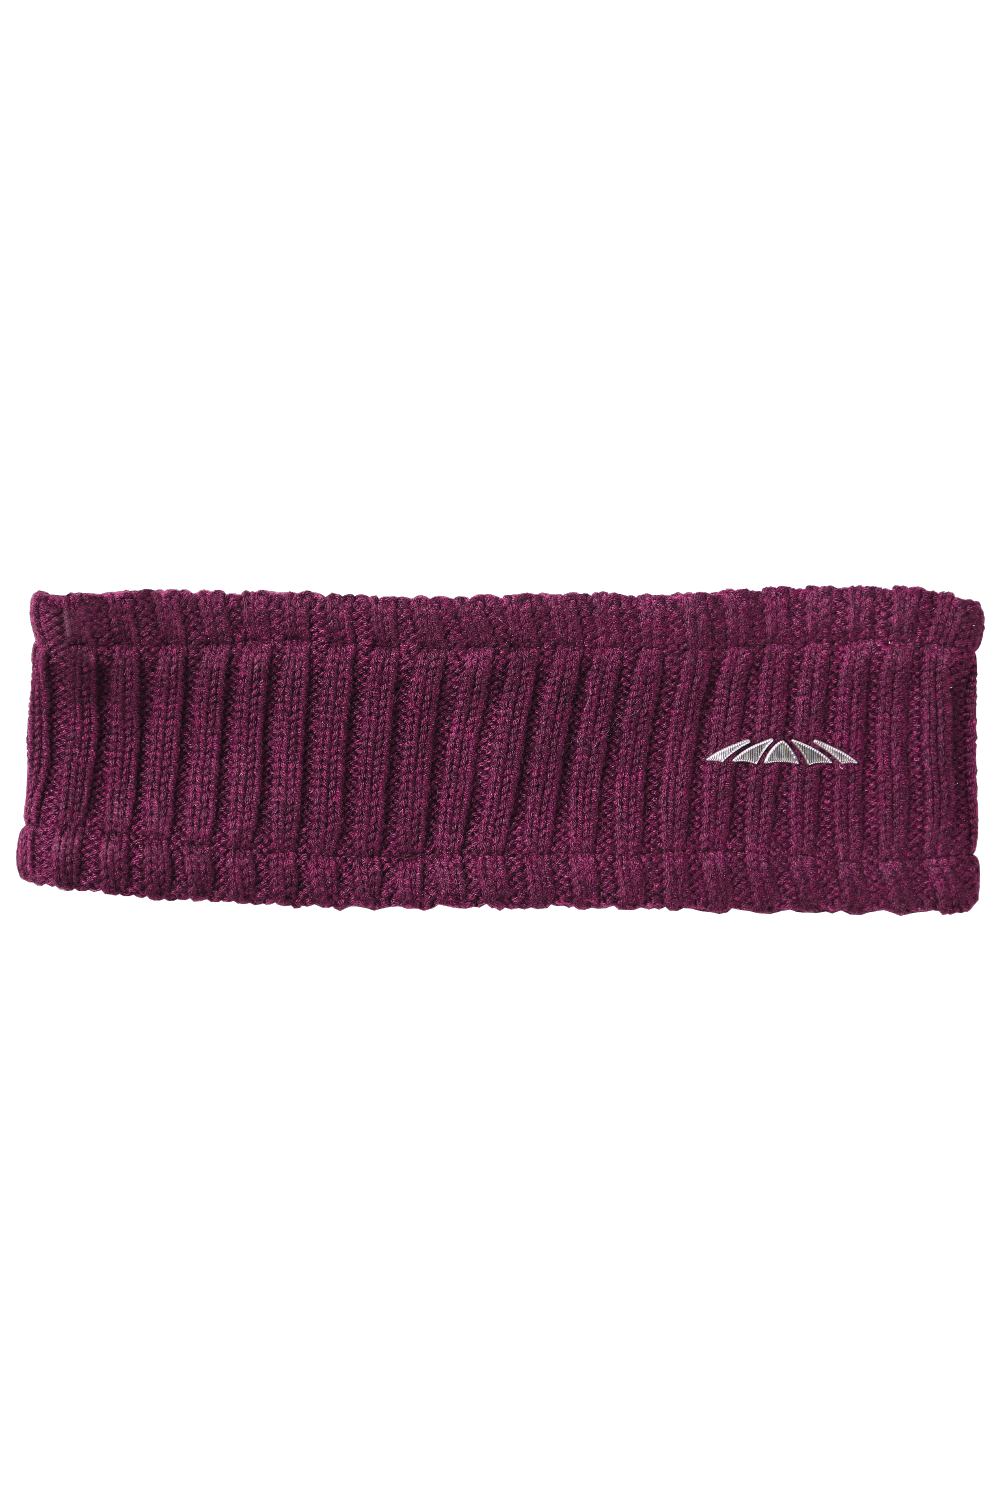 Weatherbeeta Knit Headband in Mulberry 